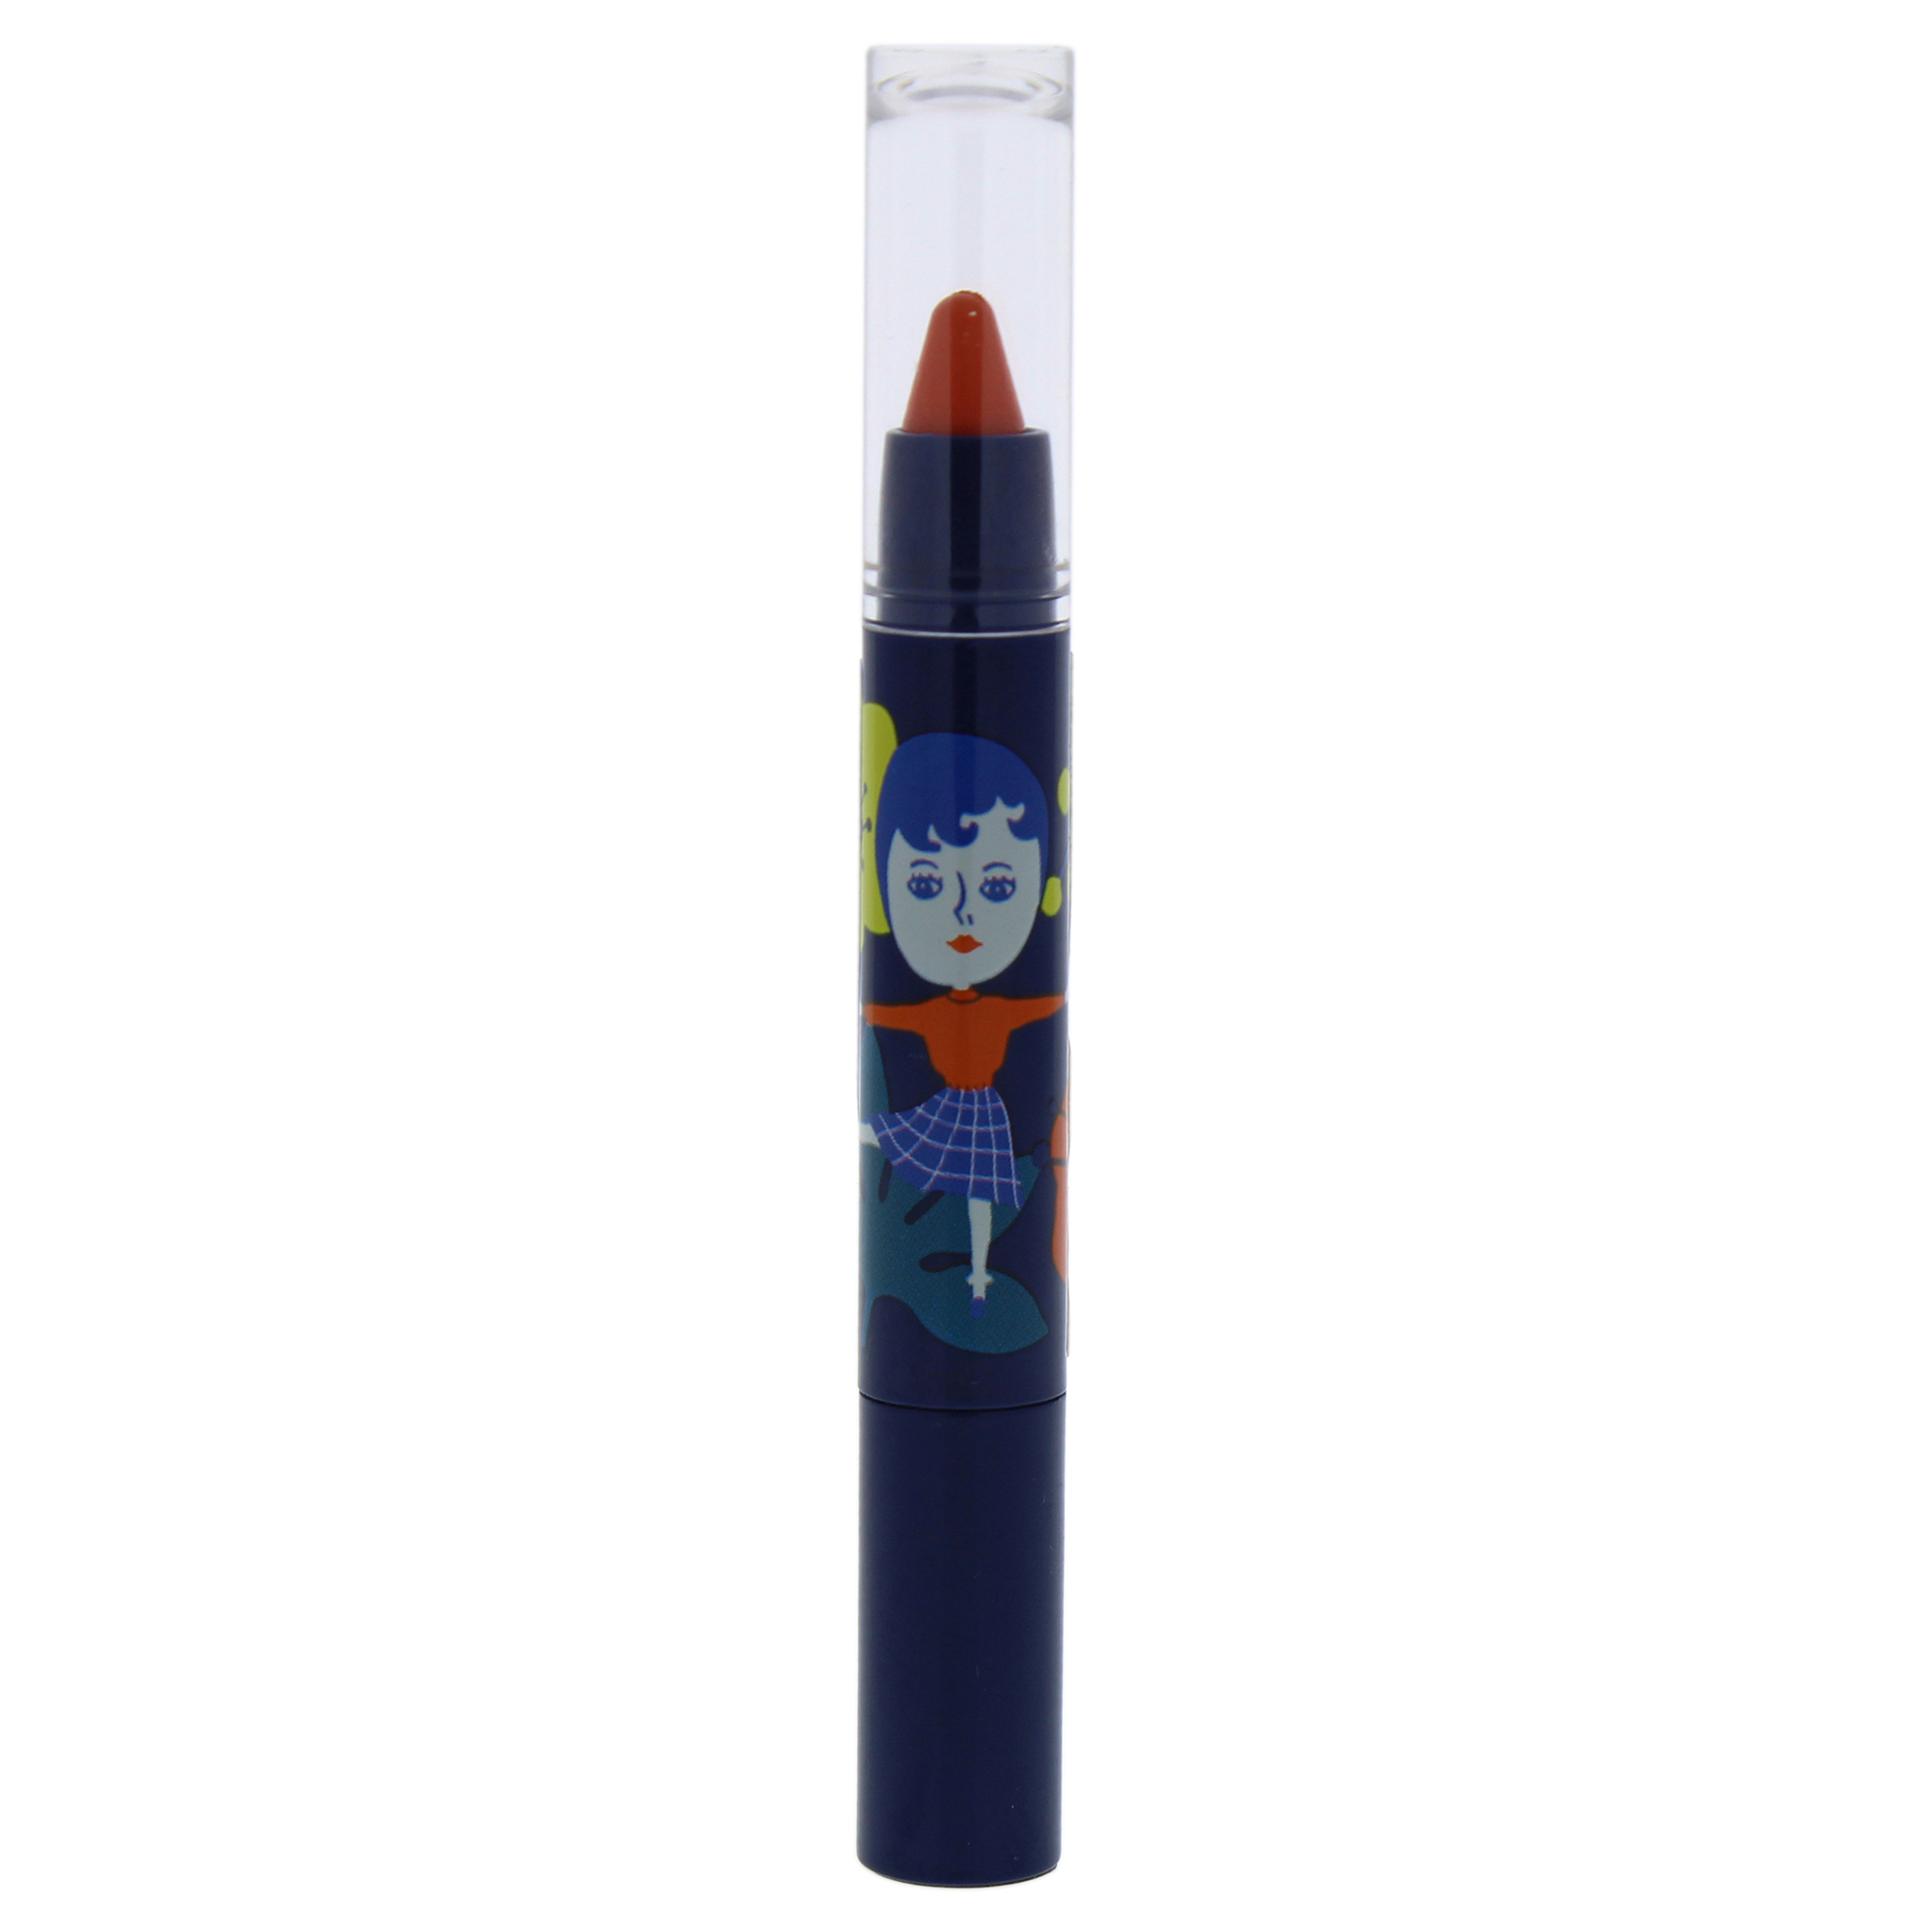 Crayon Lipstick - Tangerine Juice by Ooh Lala for Women - 0.05 oz Lipstick